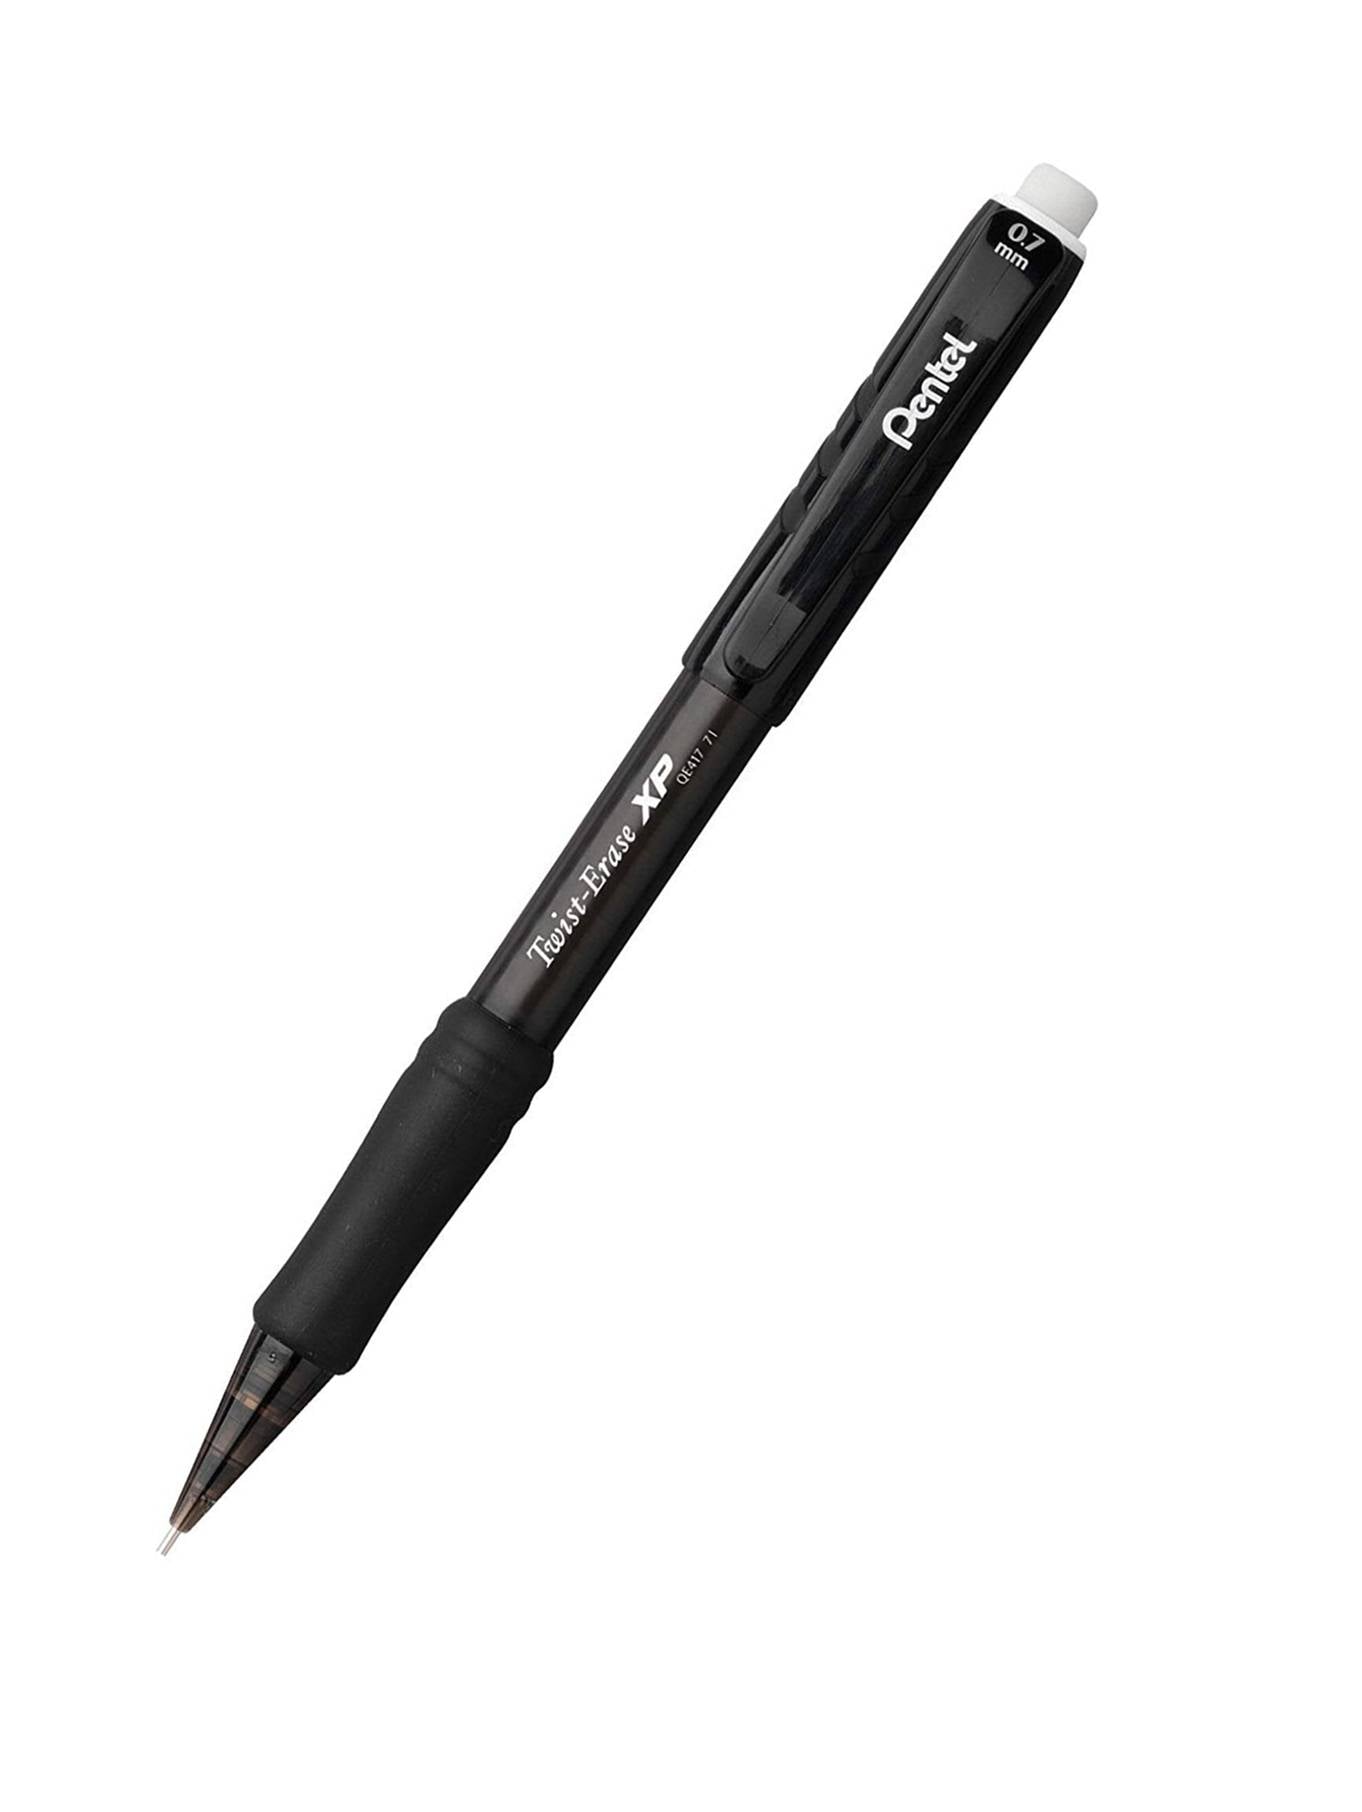 Pentel QE417 Twist-Erase EXPRESS Mechanical Pencils, 0.7mm Medium Line, Dozen Box